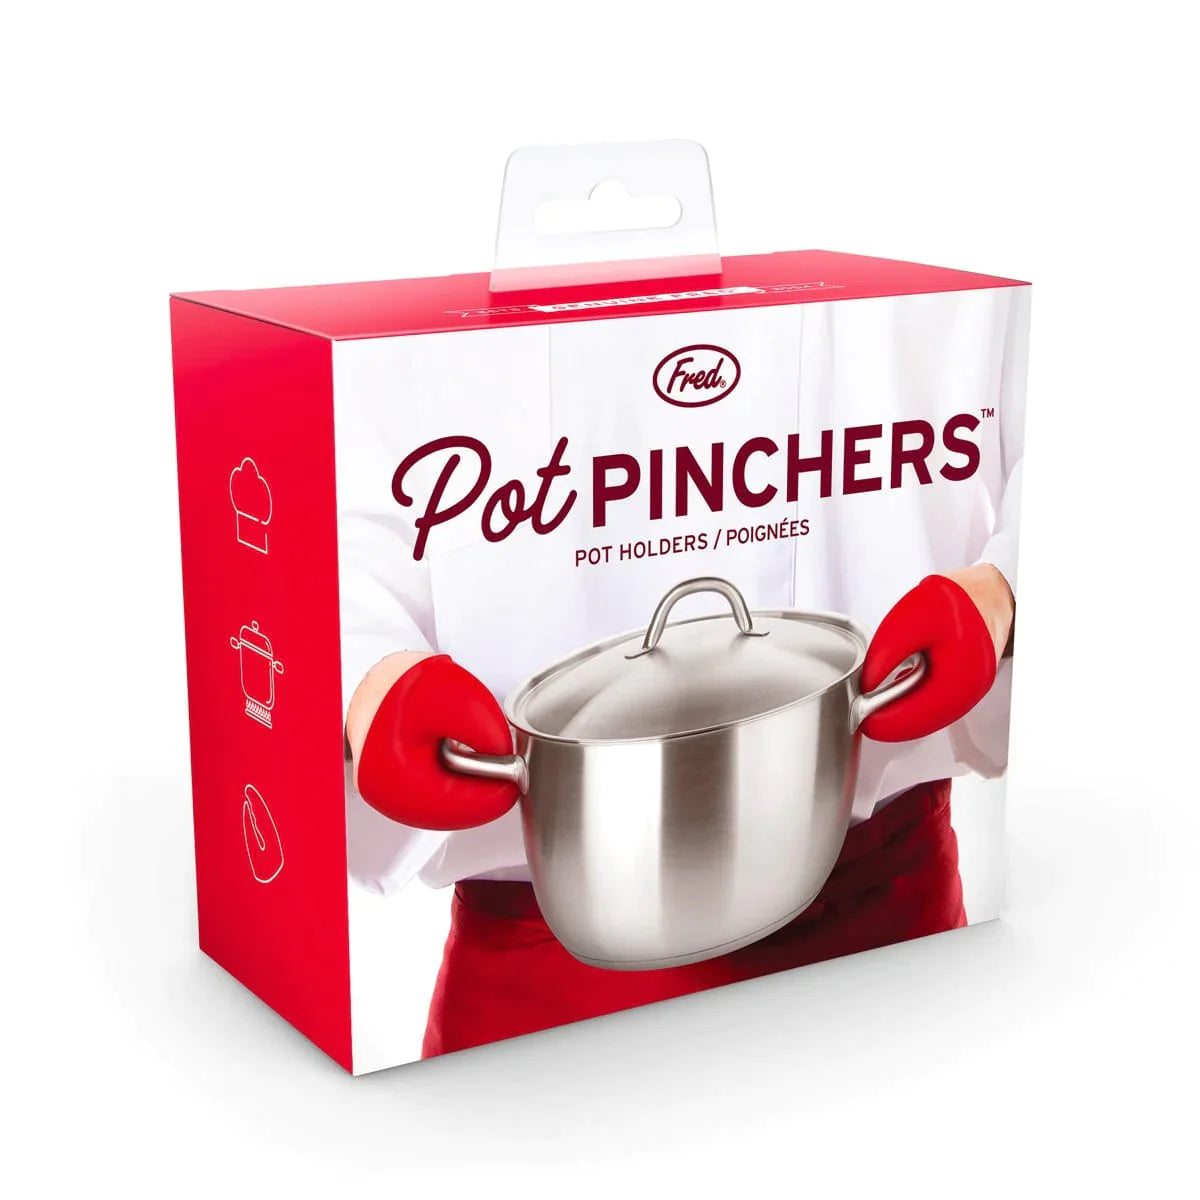 Fred Pot Pinchers